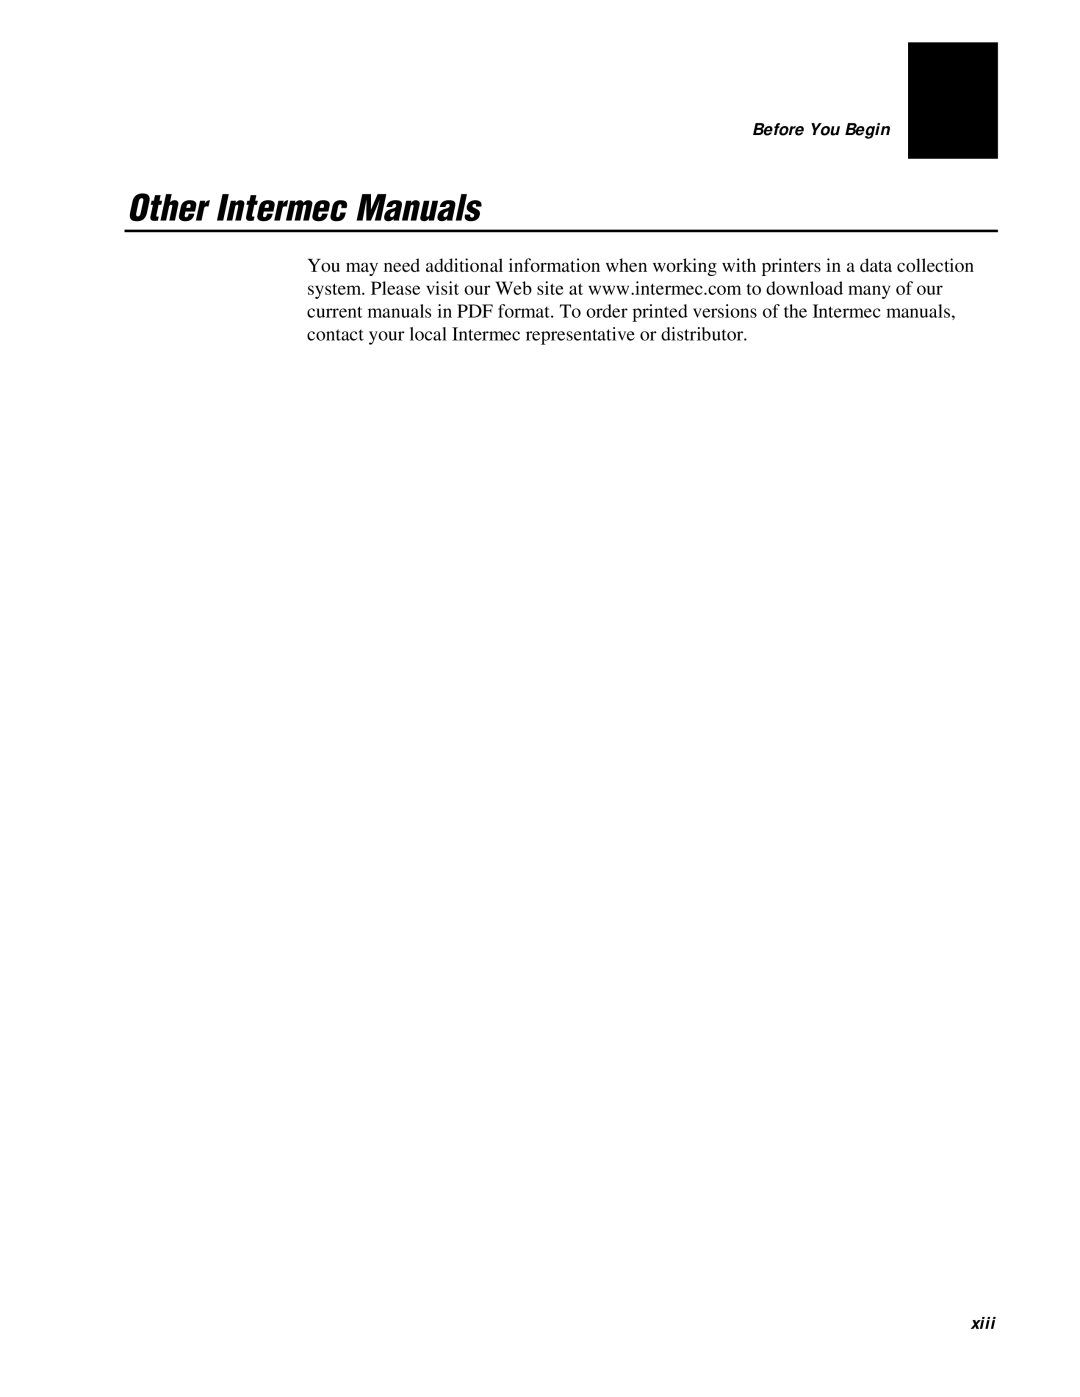 IBM EasyCoder 3400e user manual Other Intermec Manuals, Before You Begin, xiii 